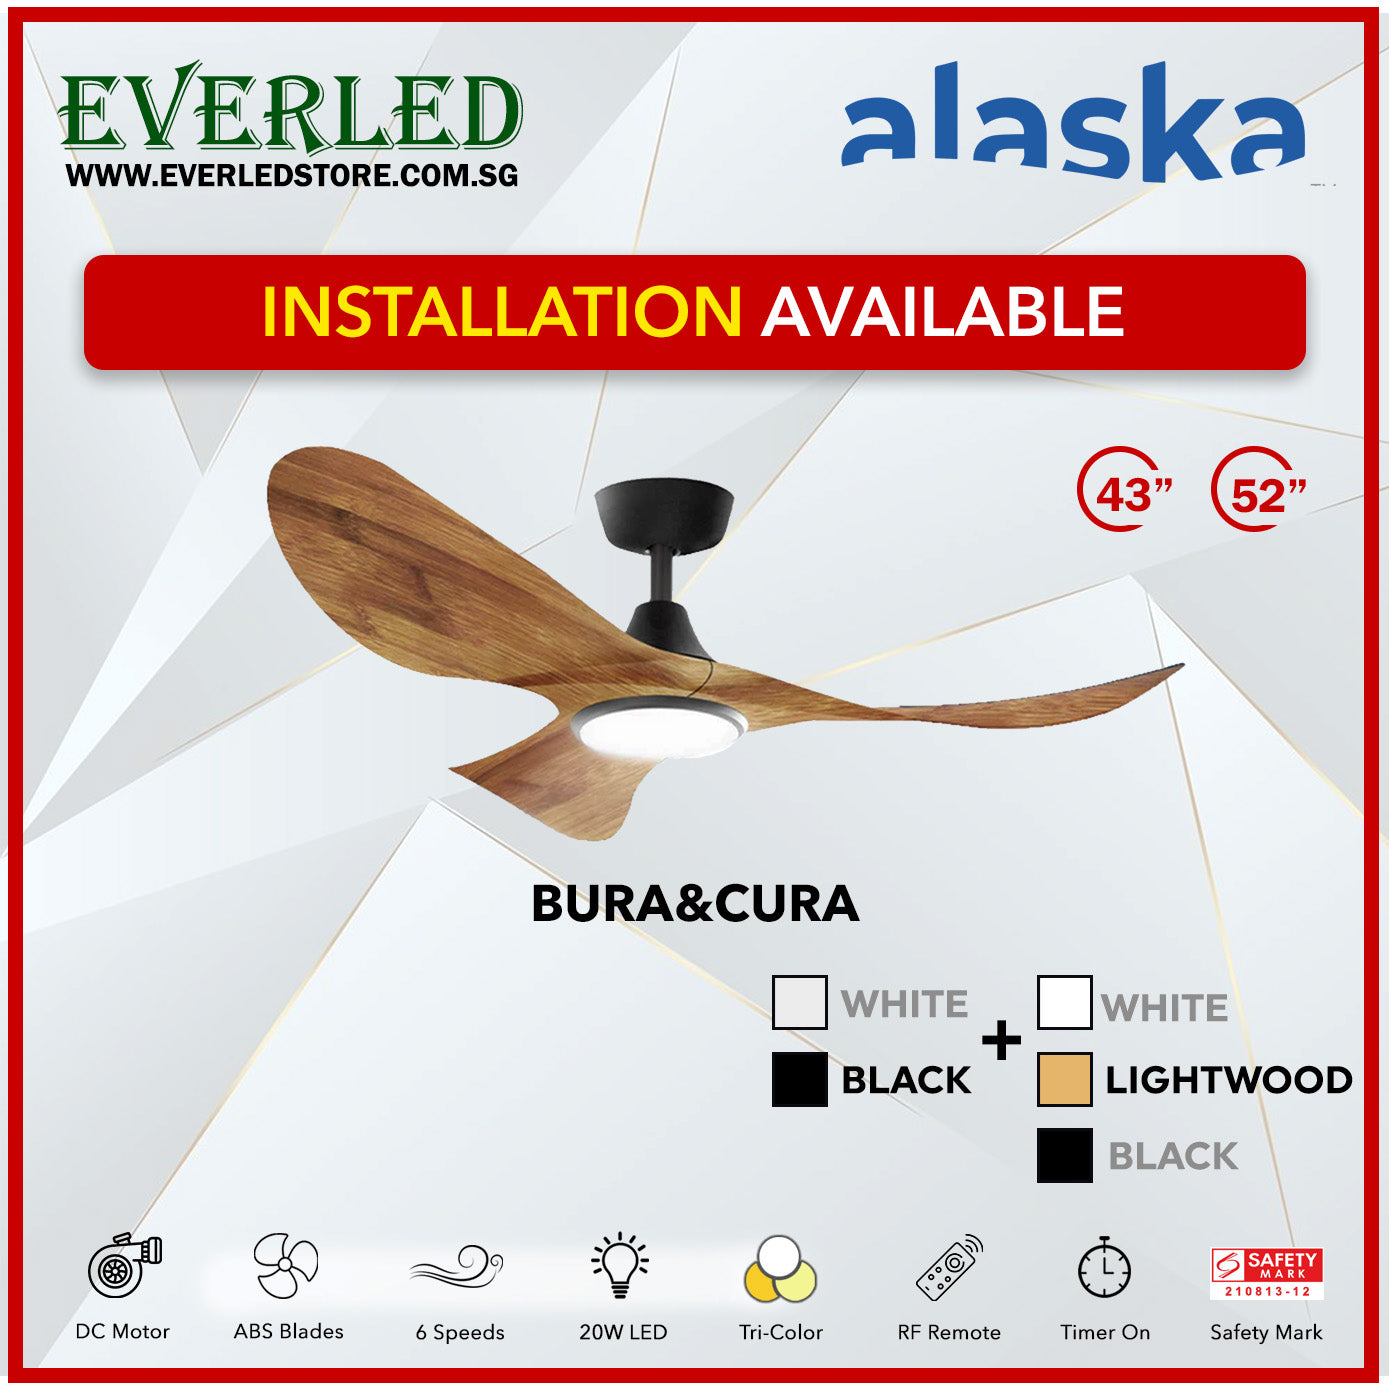 Alaska SMART DC Bura / Burah 43" (Inverter DC Fan) with Samsung dimmable light kit